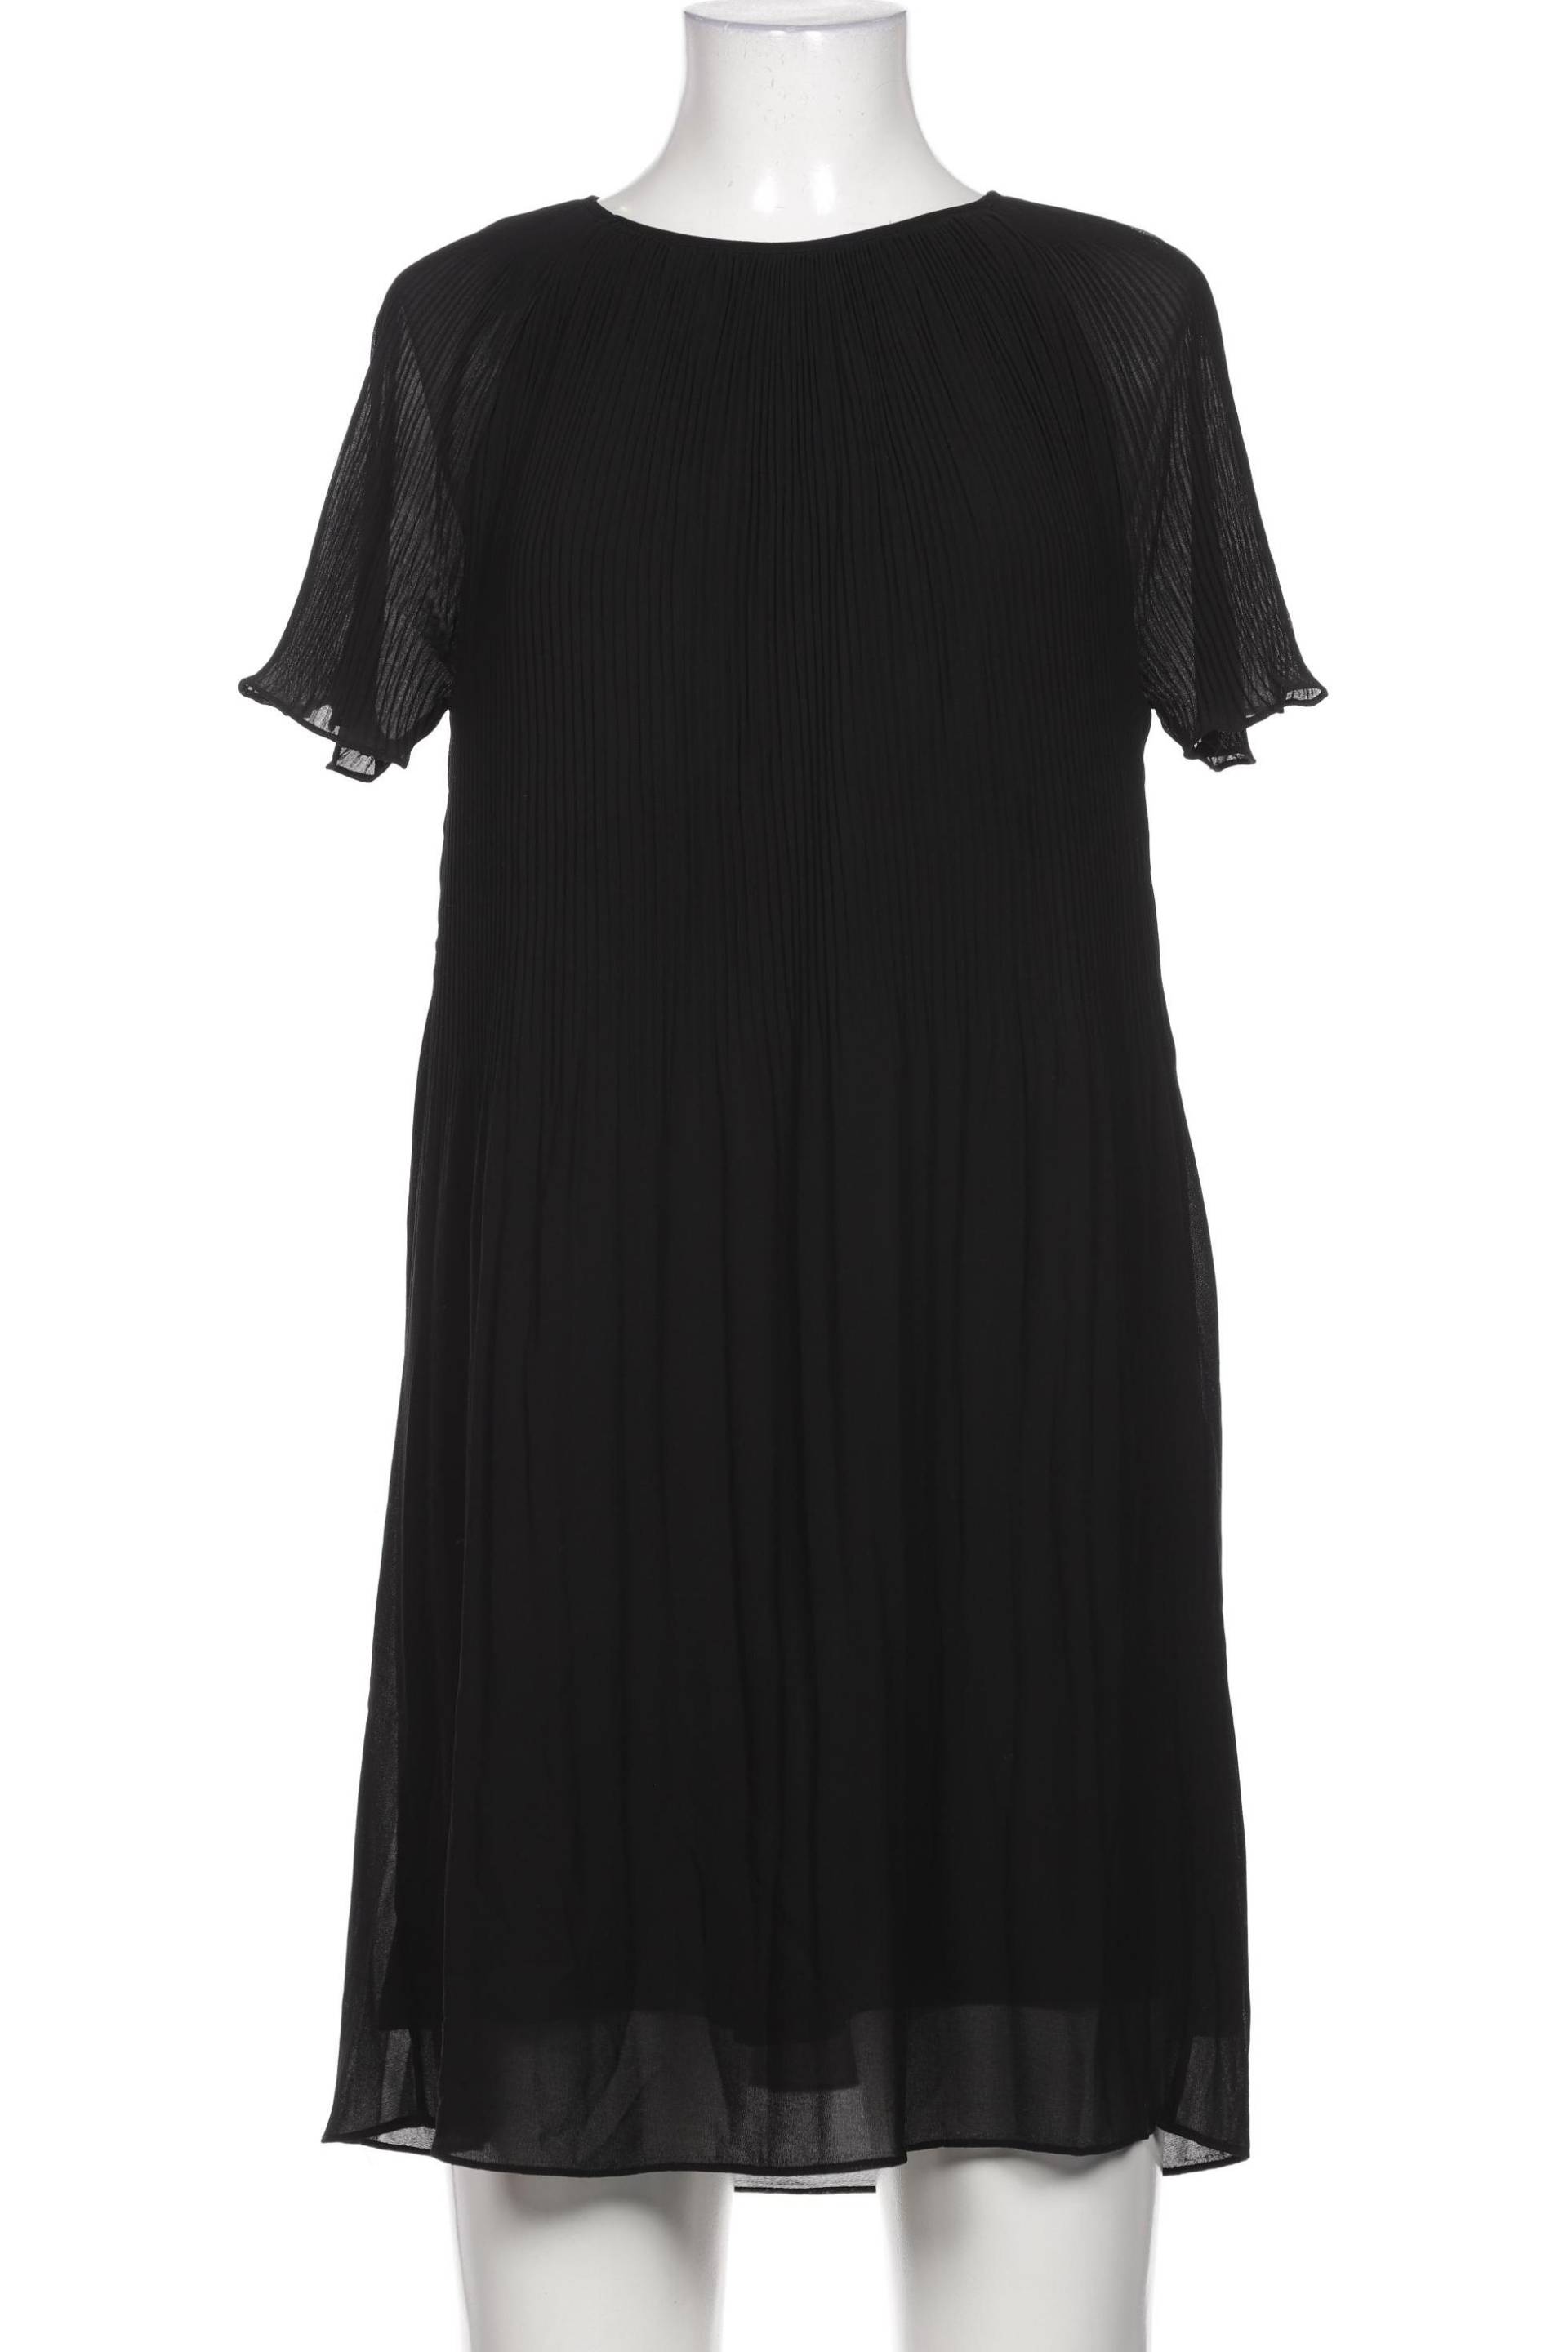 MICHAEL MICHAEL KORS Damen Kleid, schwarz von MICHAEL Michael Kors